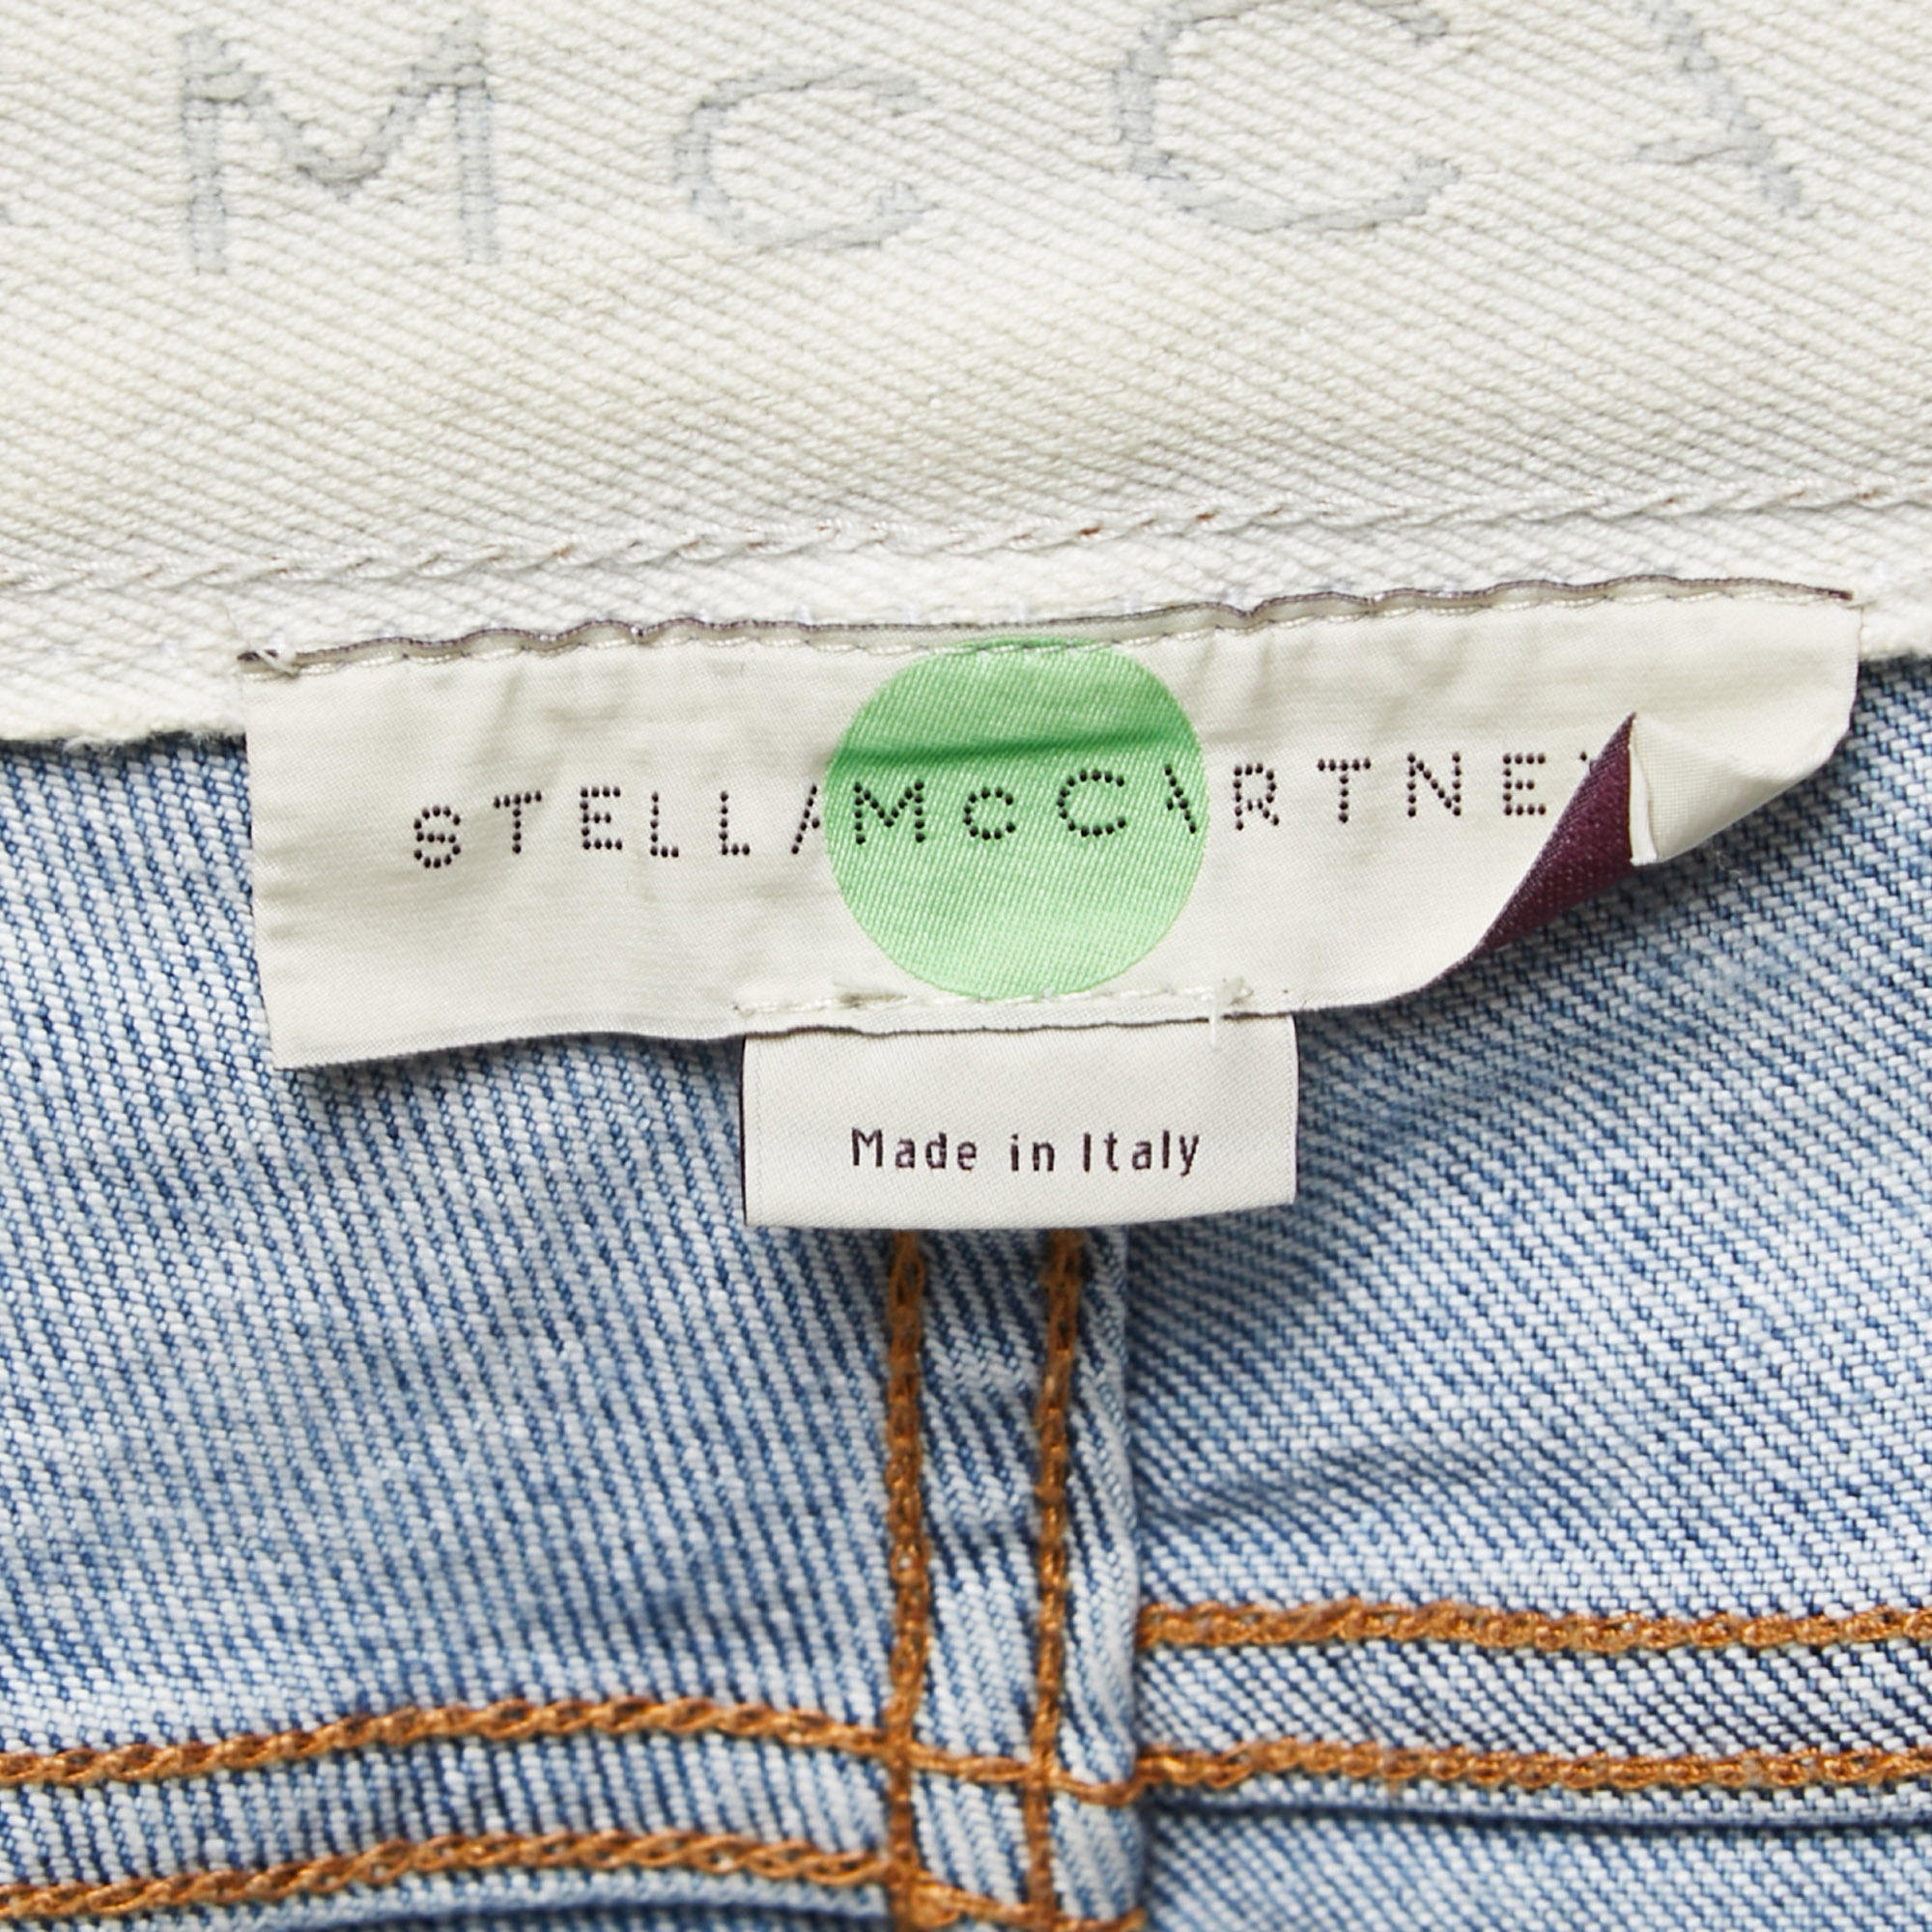 Stella McCartney Blue Washed & Distressed Denim Jeans S Waist 27